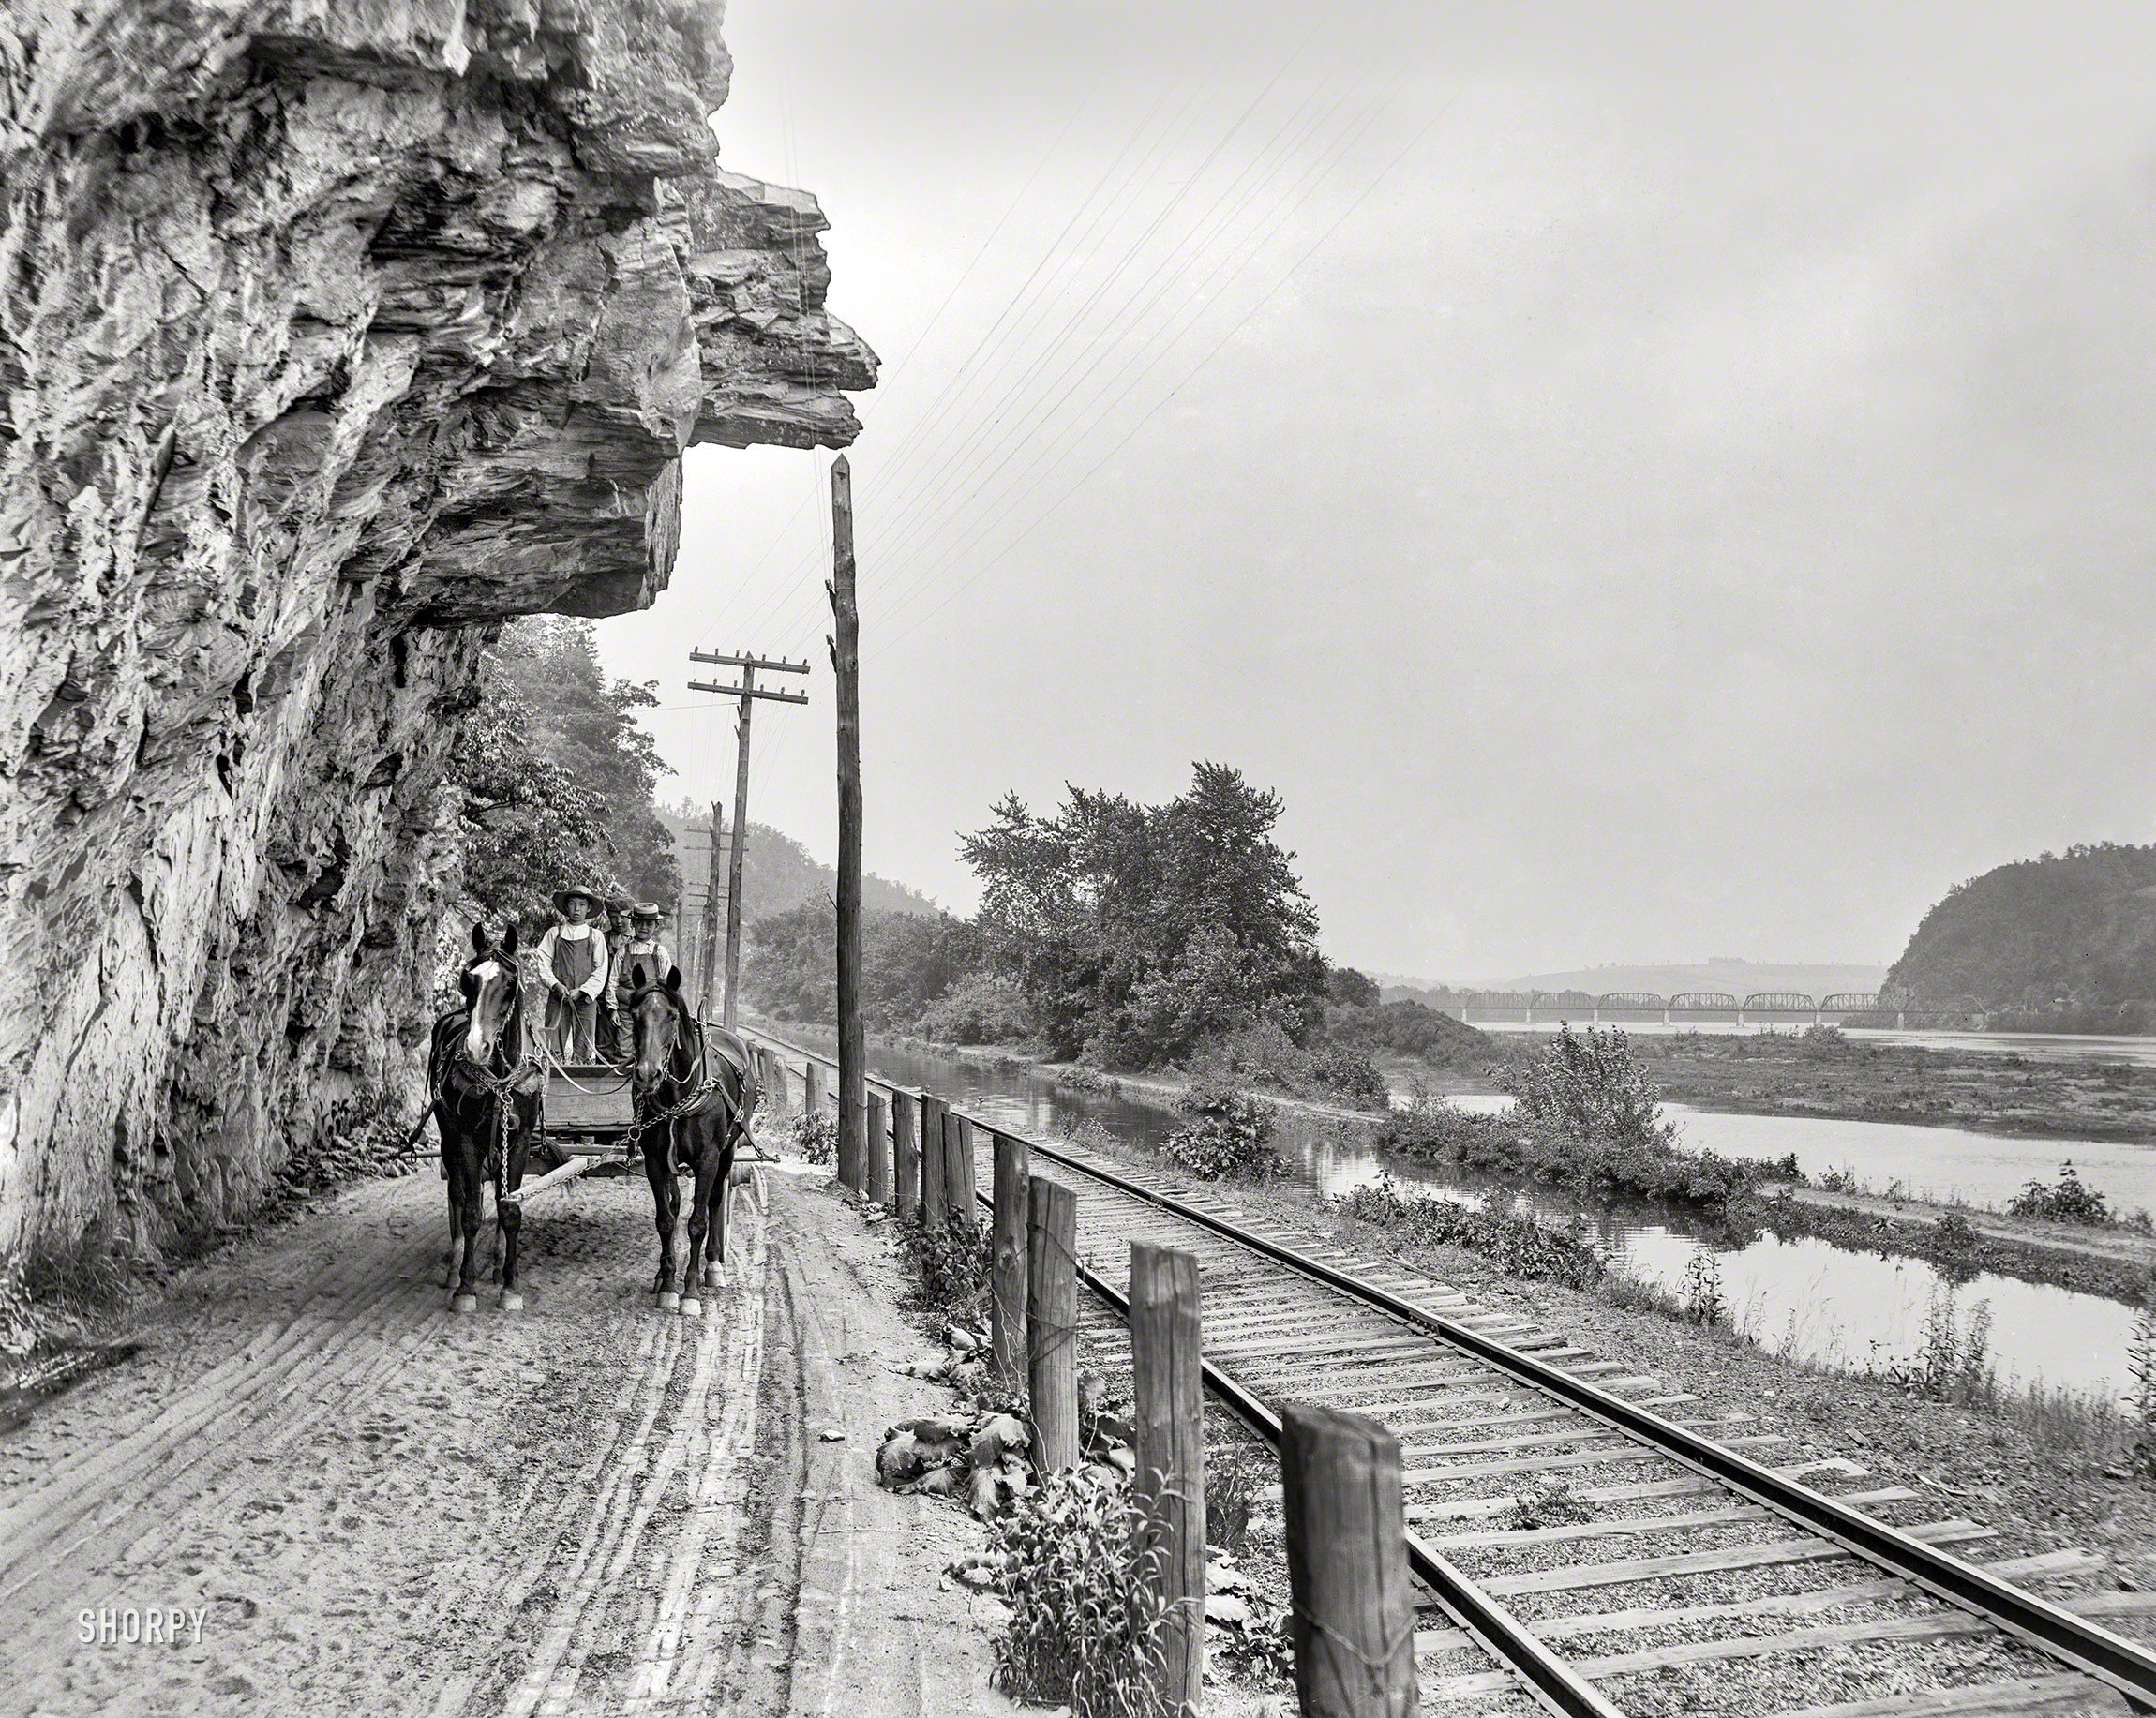 Columbia County, Pennsylvania, circa 1901. "Hanging rock on the Susquehanna, near Danville." A scene last glimpsed here. 8x10 glass negative. View full size.